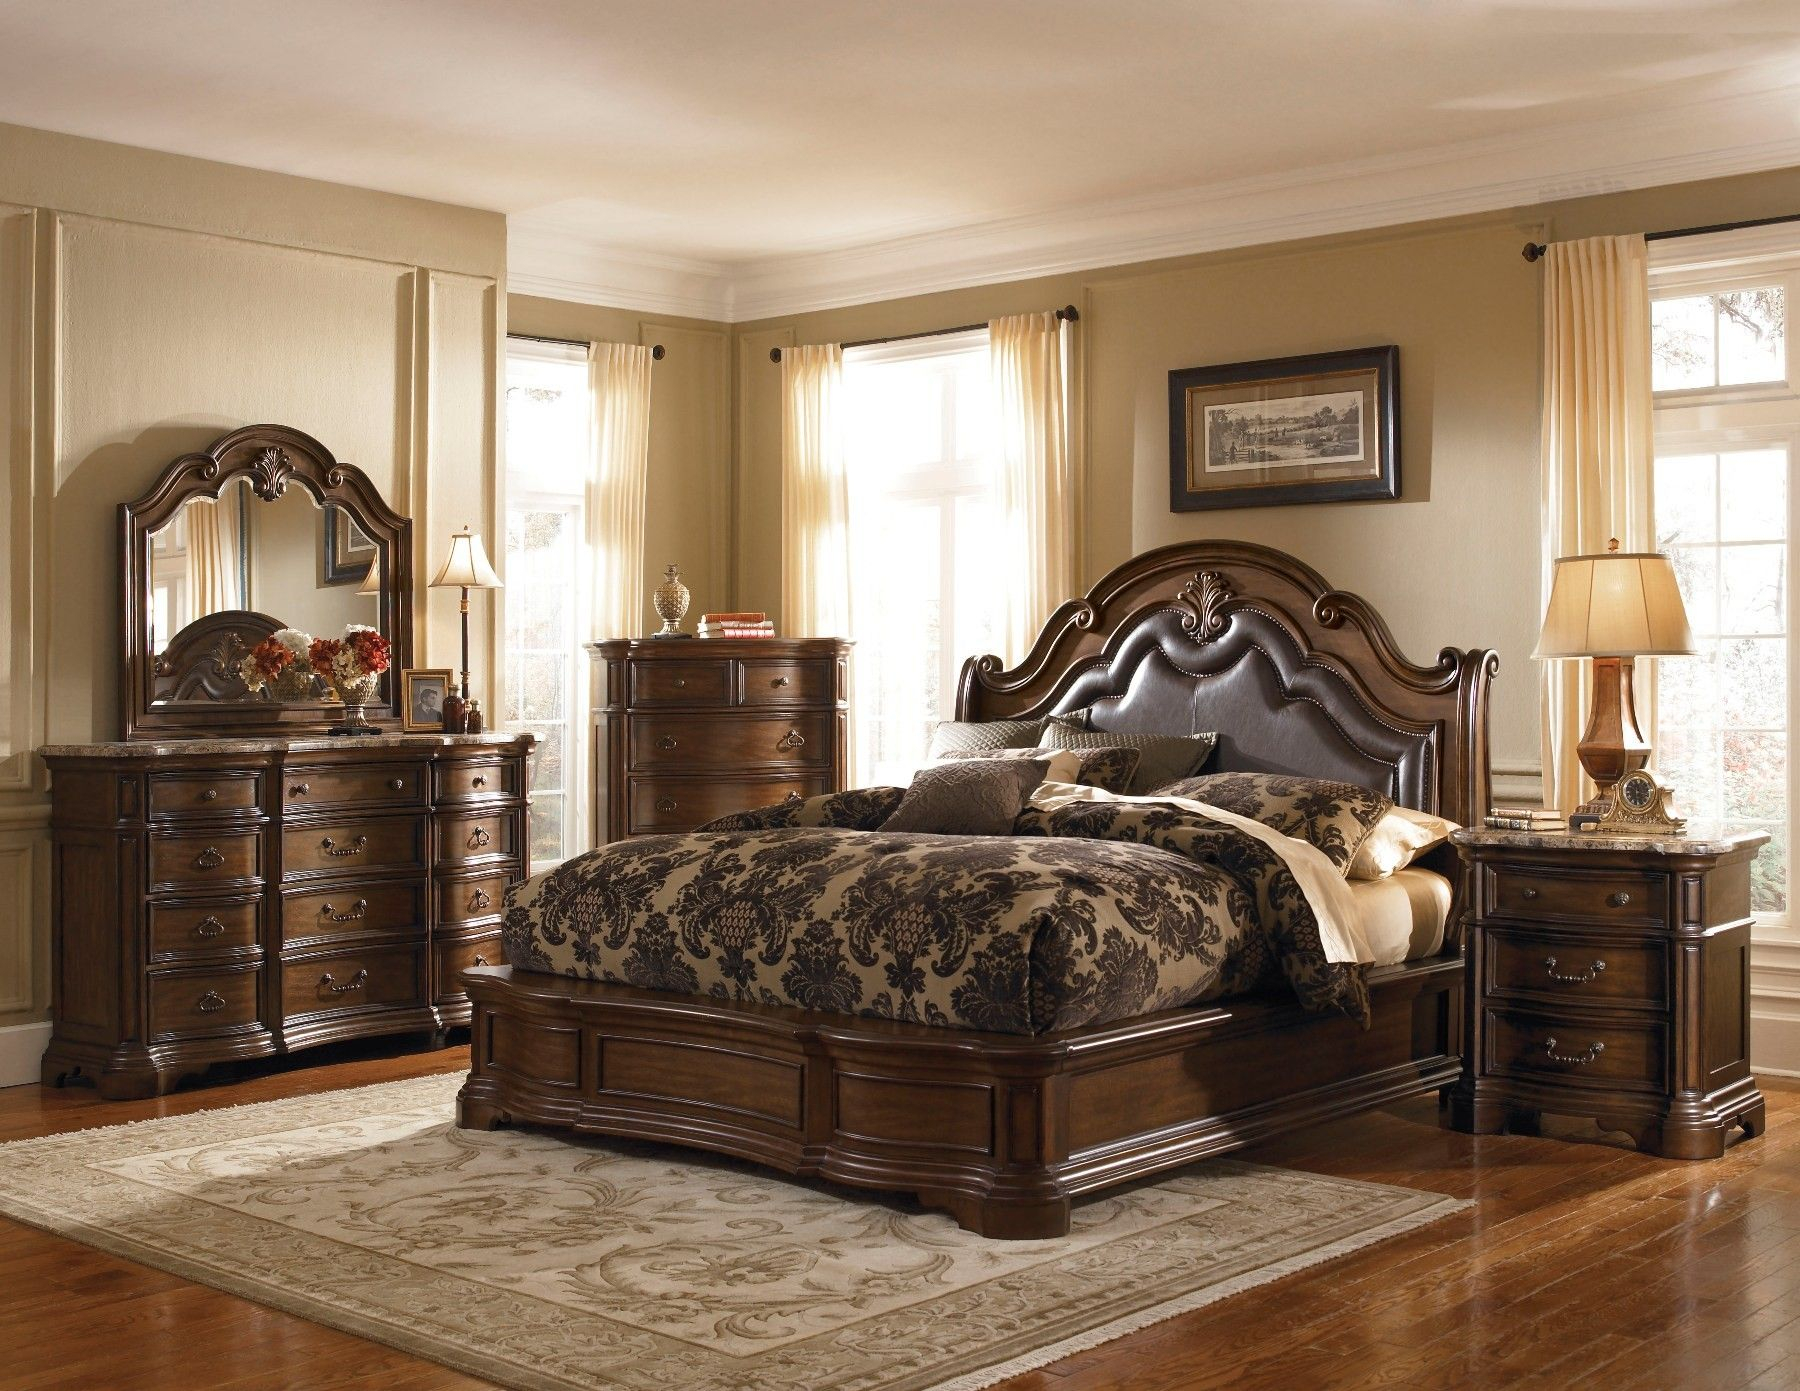 Pulaski Bedroom Furniture Wholesale Closeouts Courtland Bedroom in measurements 1800 X 1391